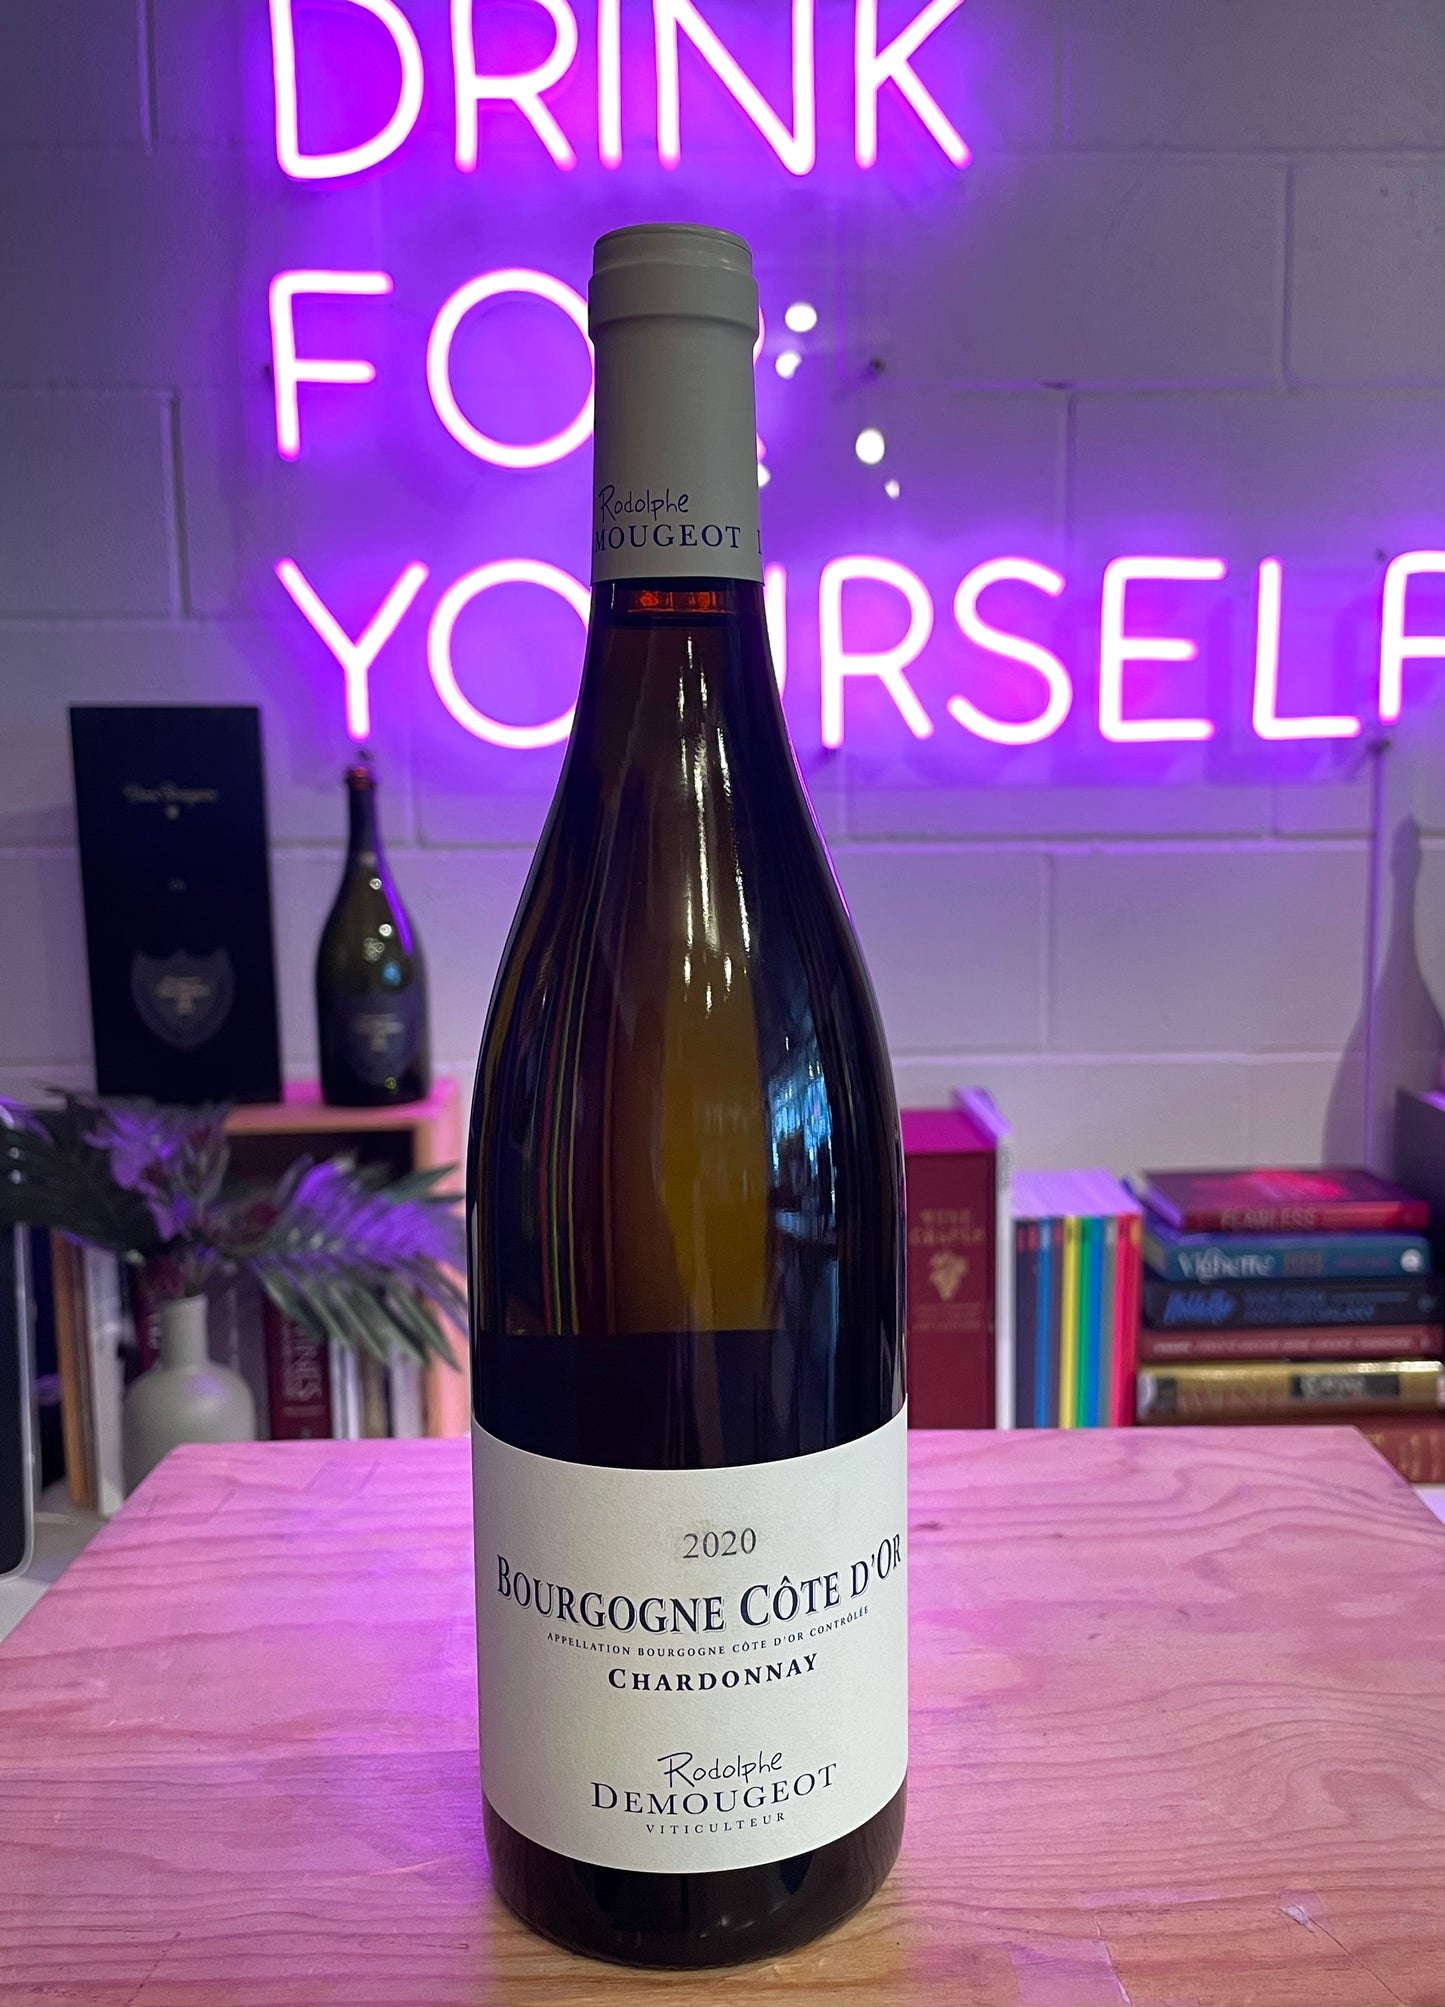 Rodolphe Demougeot Bourgogne Cote d'Or Chardonnay, Burgundy 2020